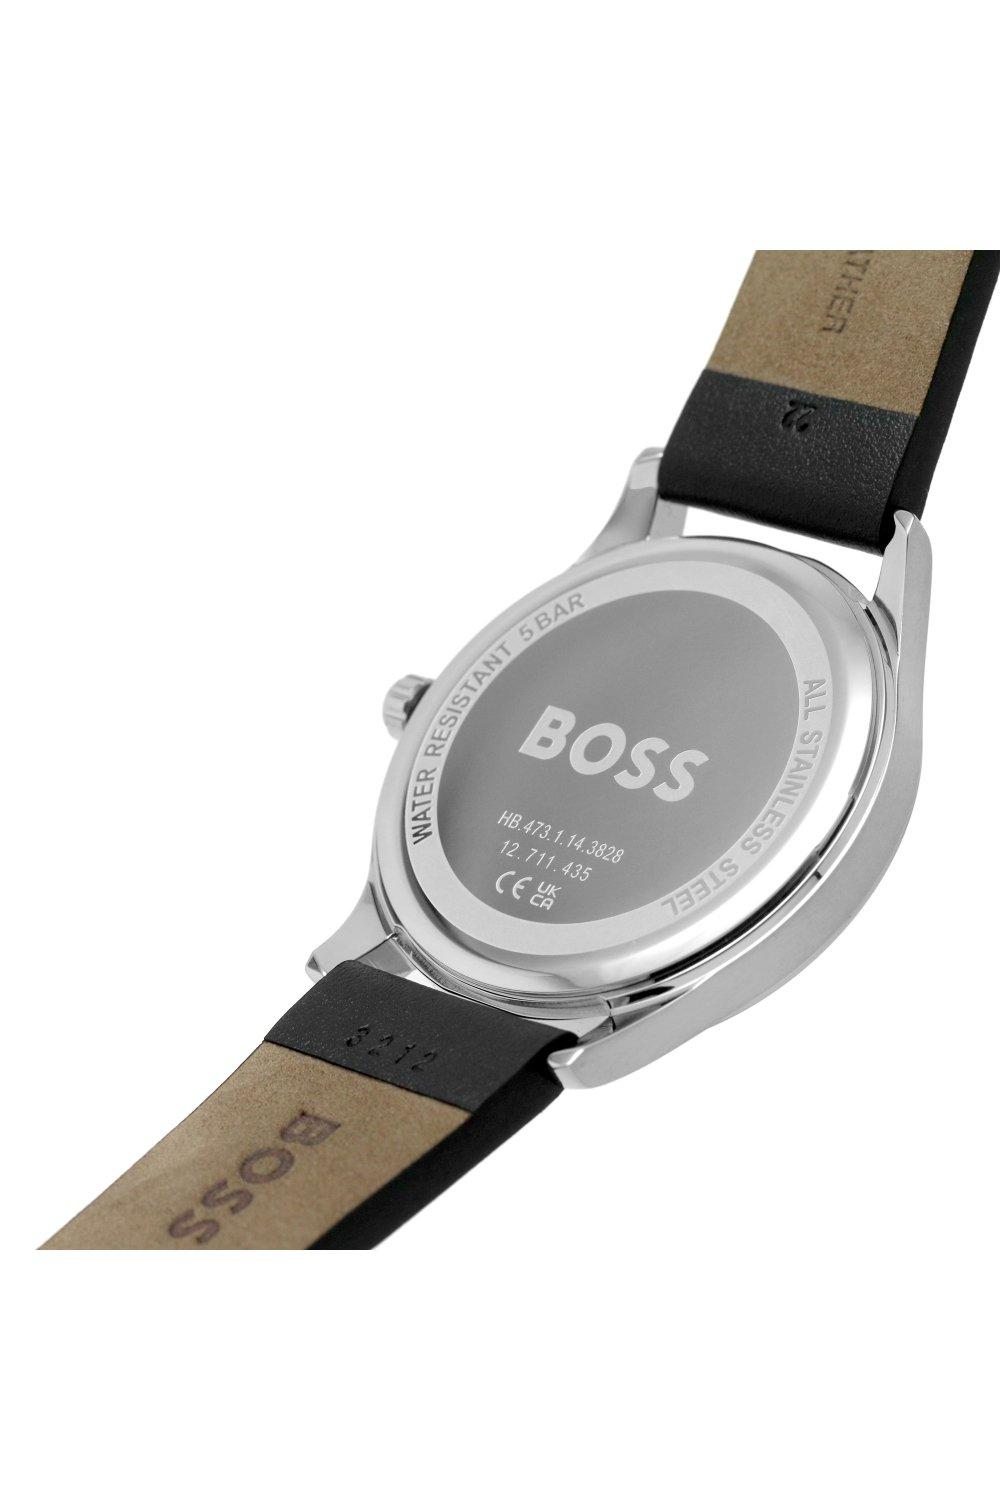 BOSS Watches Reason 1513981 - Quartz | Watch Fashion Analogue Stainless | Steel